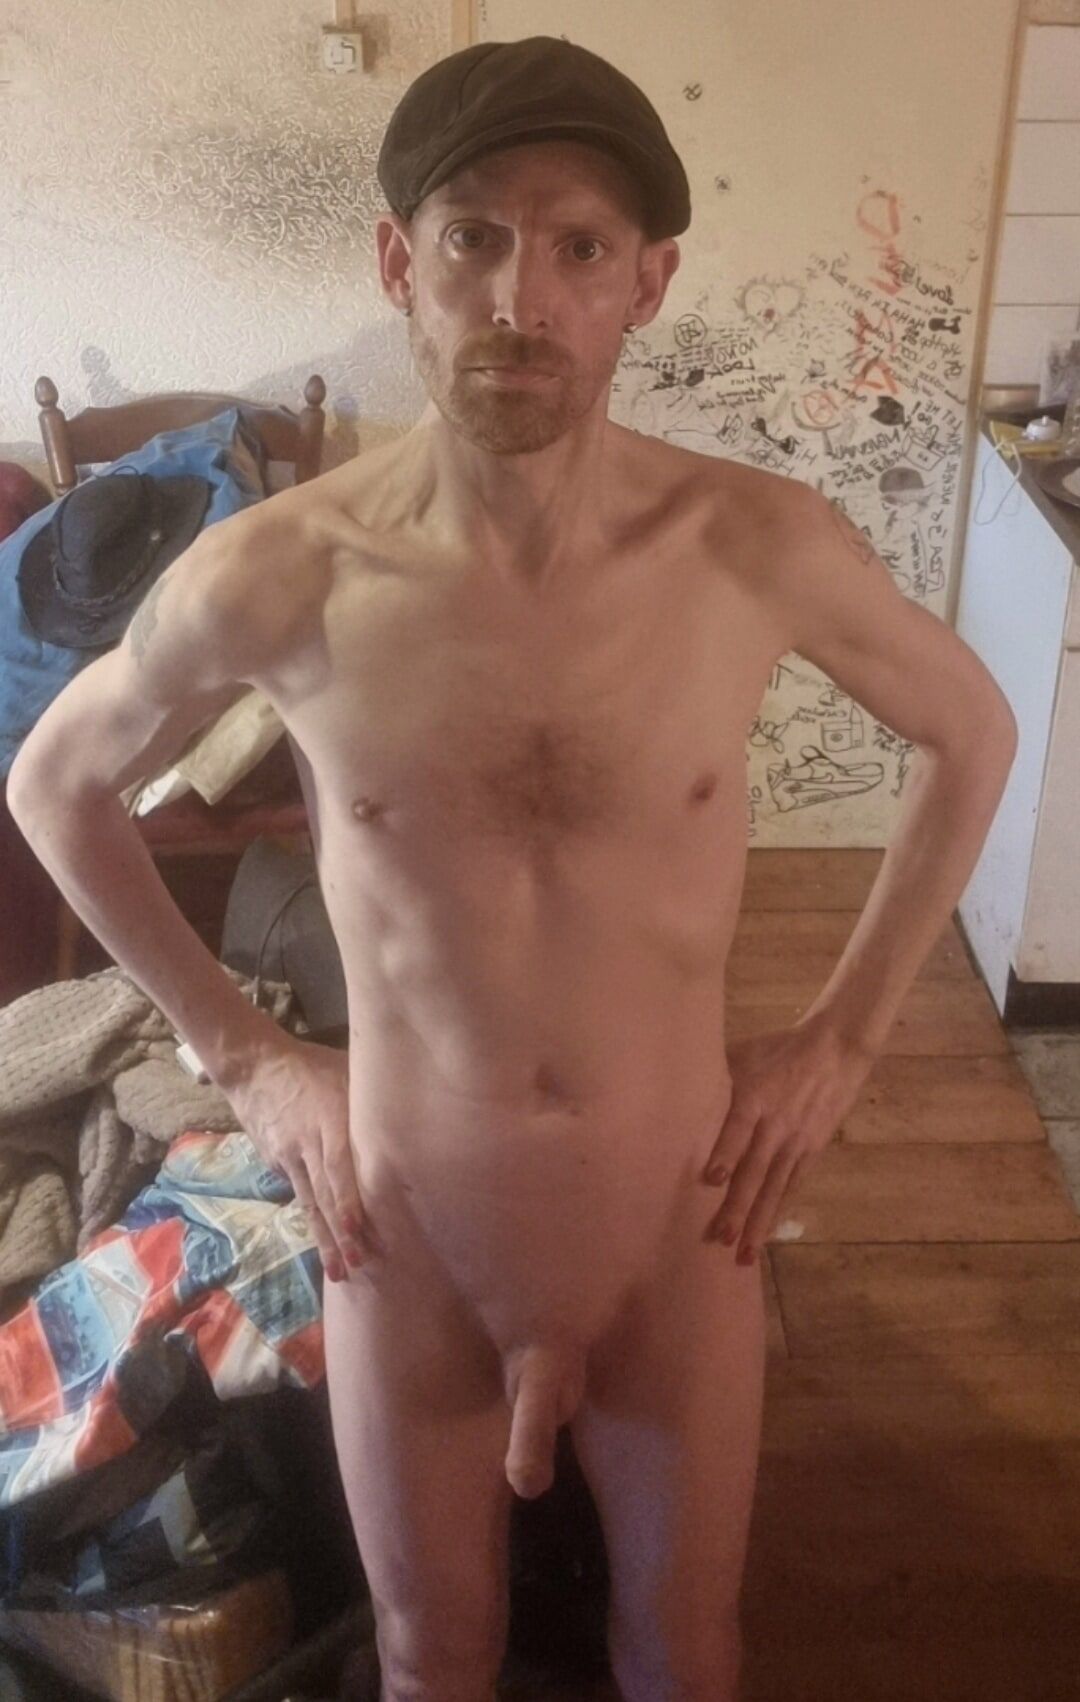 HeDDuDe posing in the nude